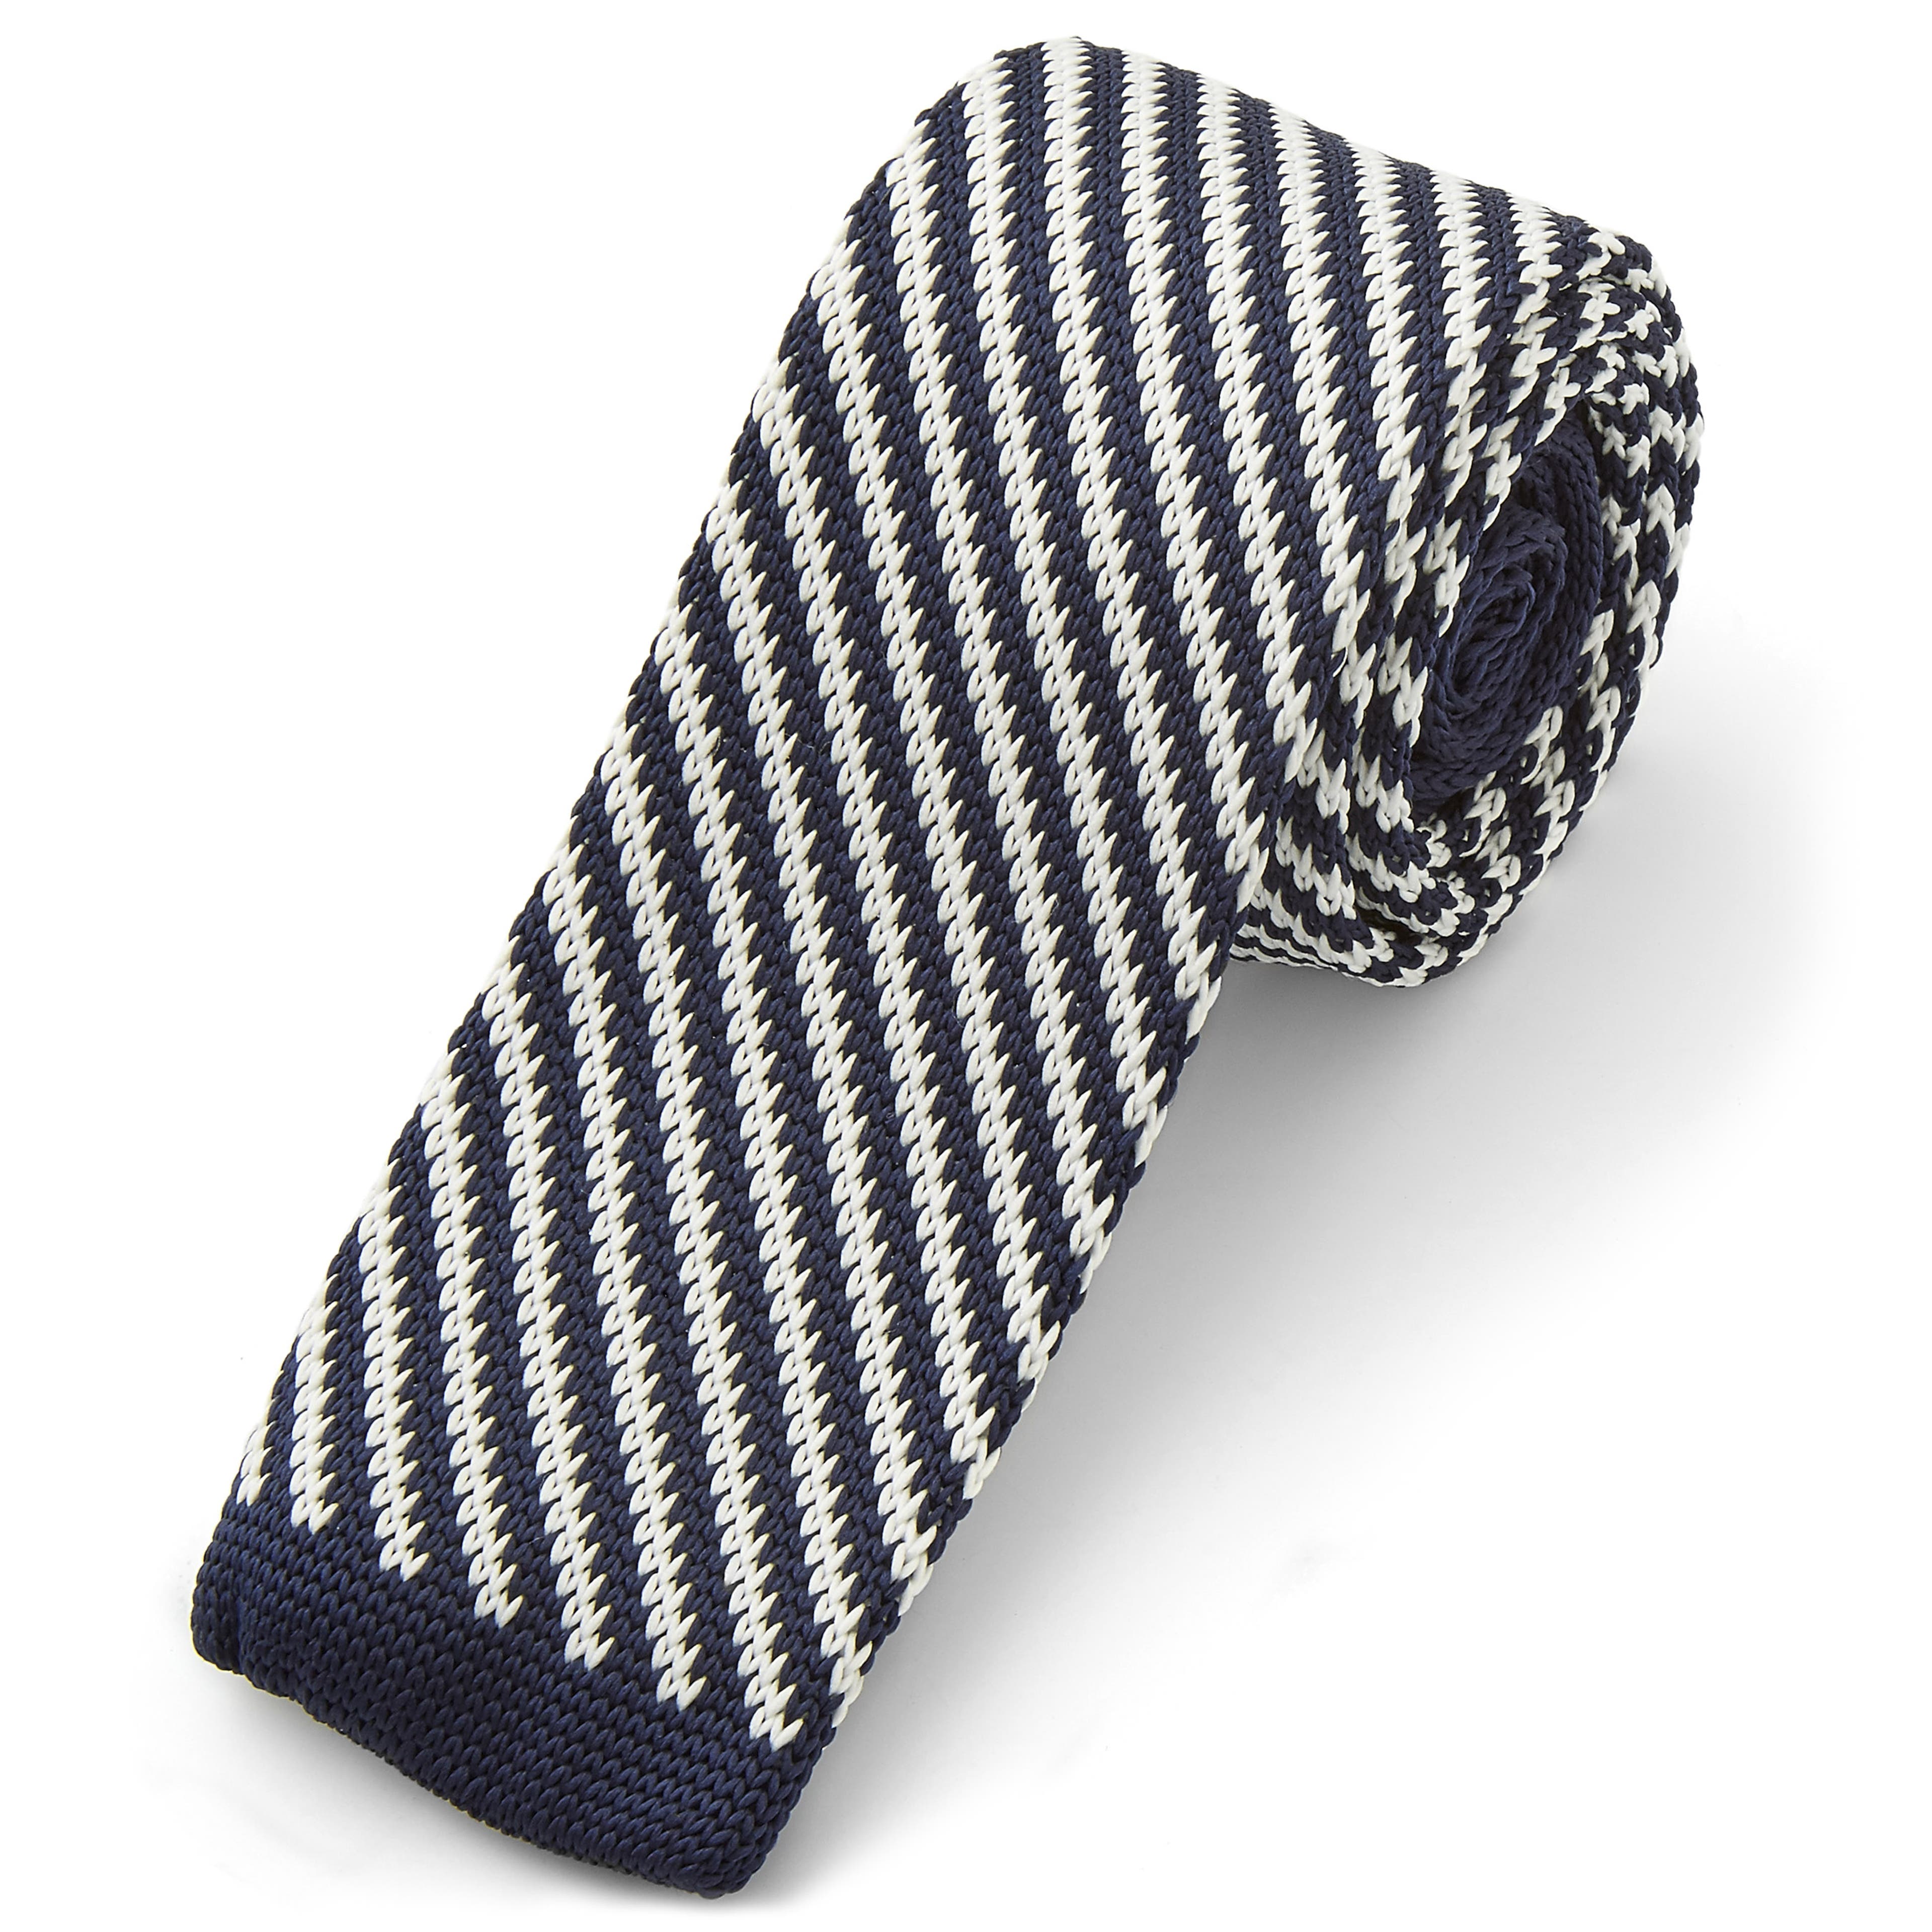 Corbata de punto blanca y azul a rayas